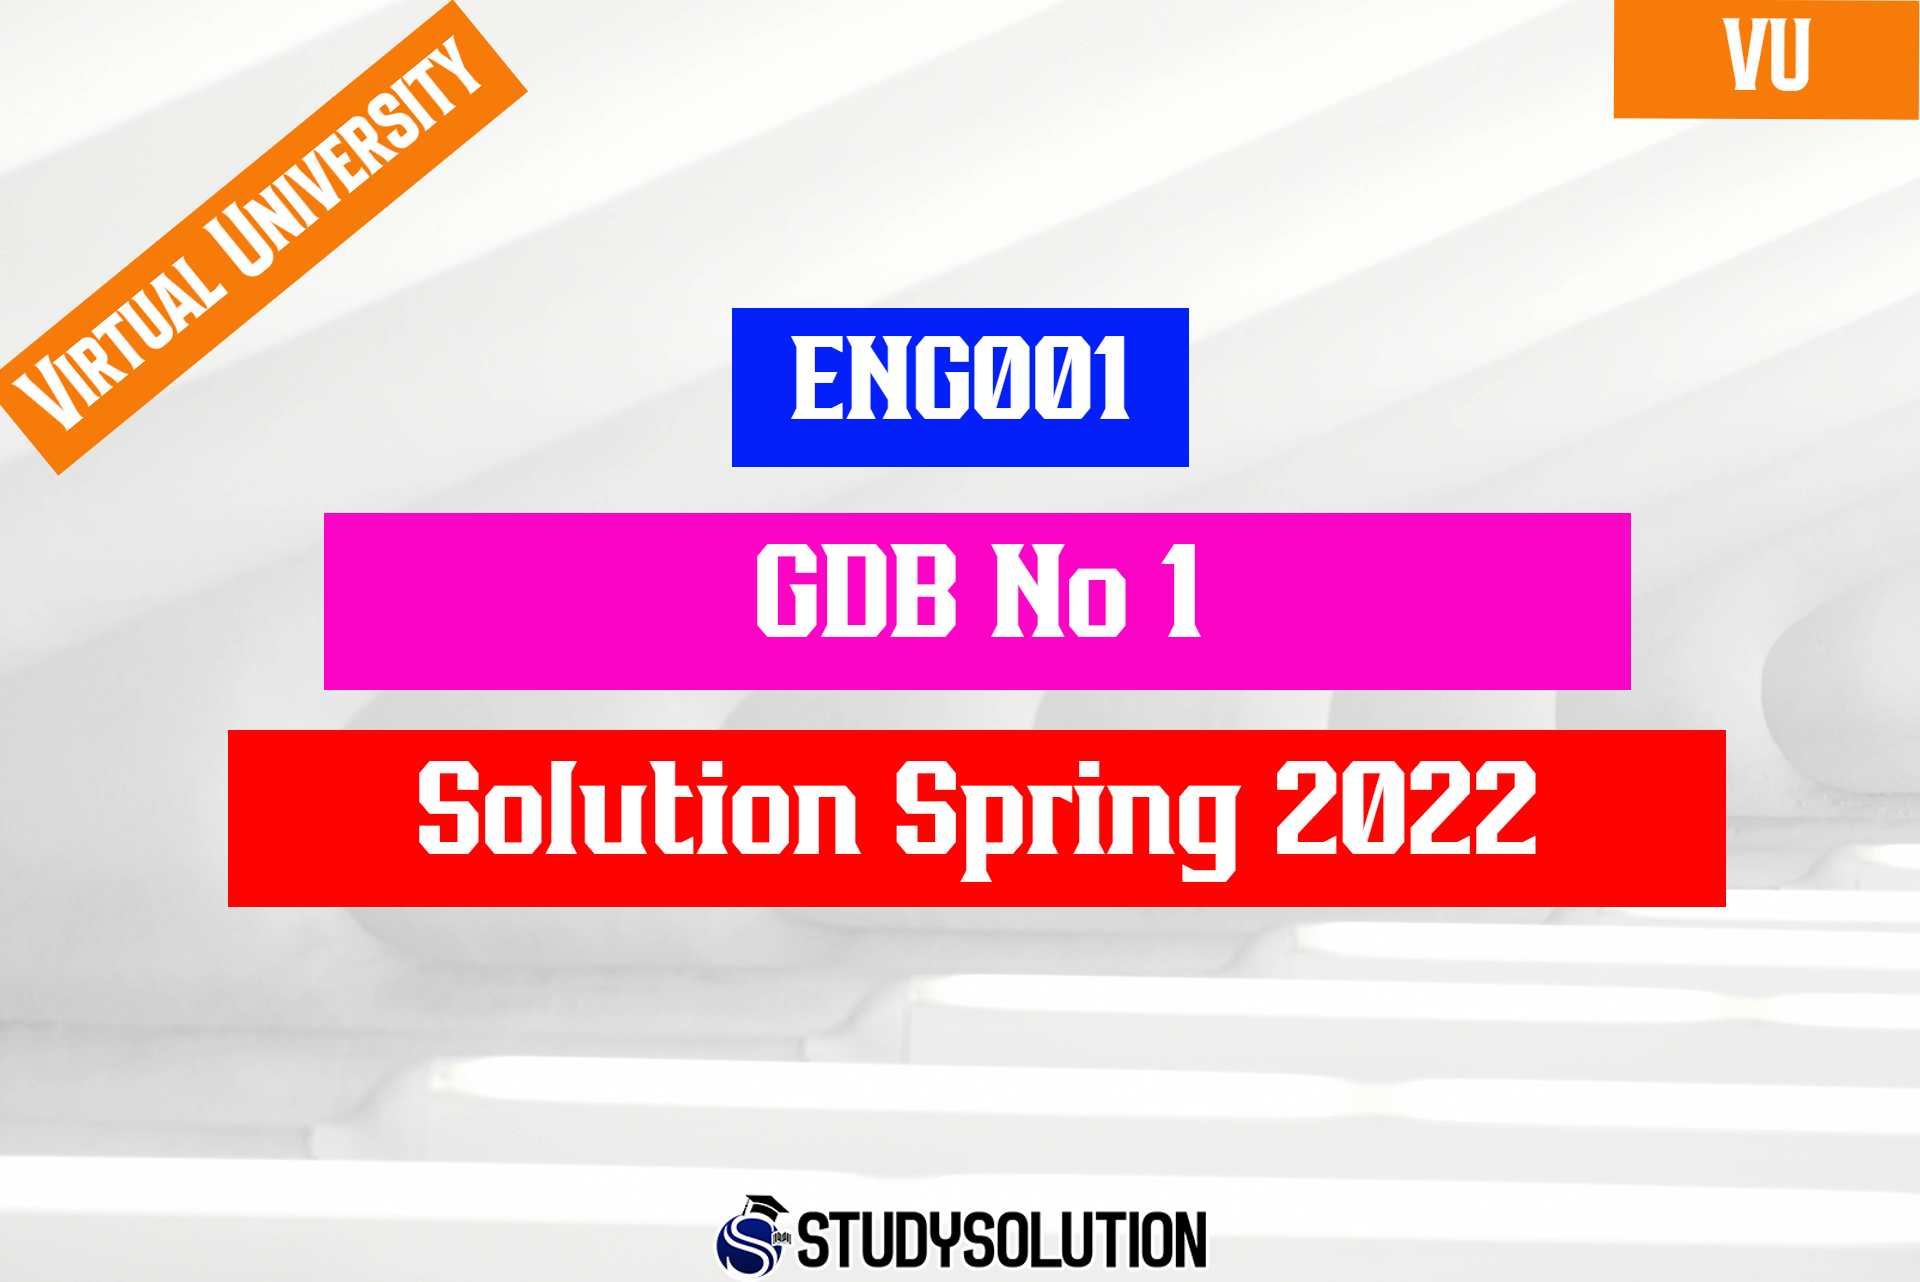 ENG001 GDB No 1 Solution Spring 2022